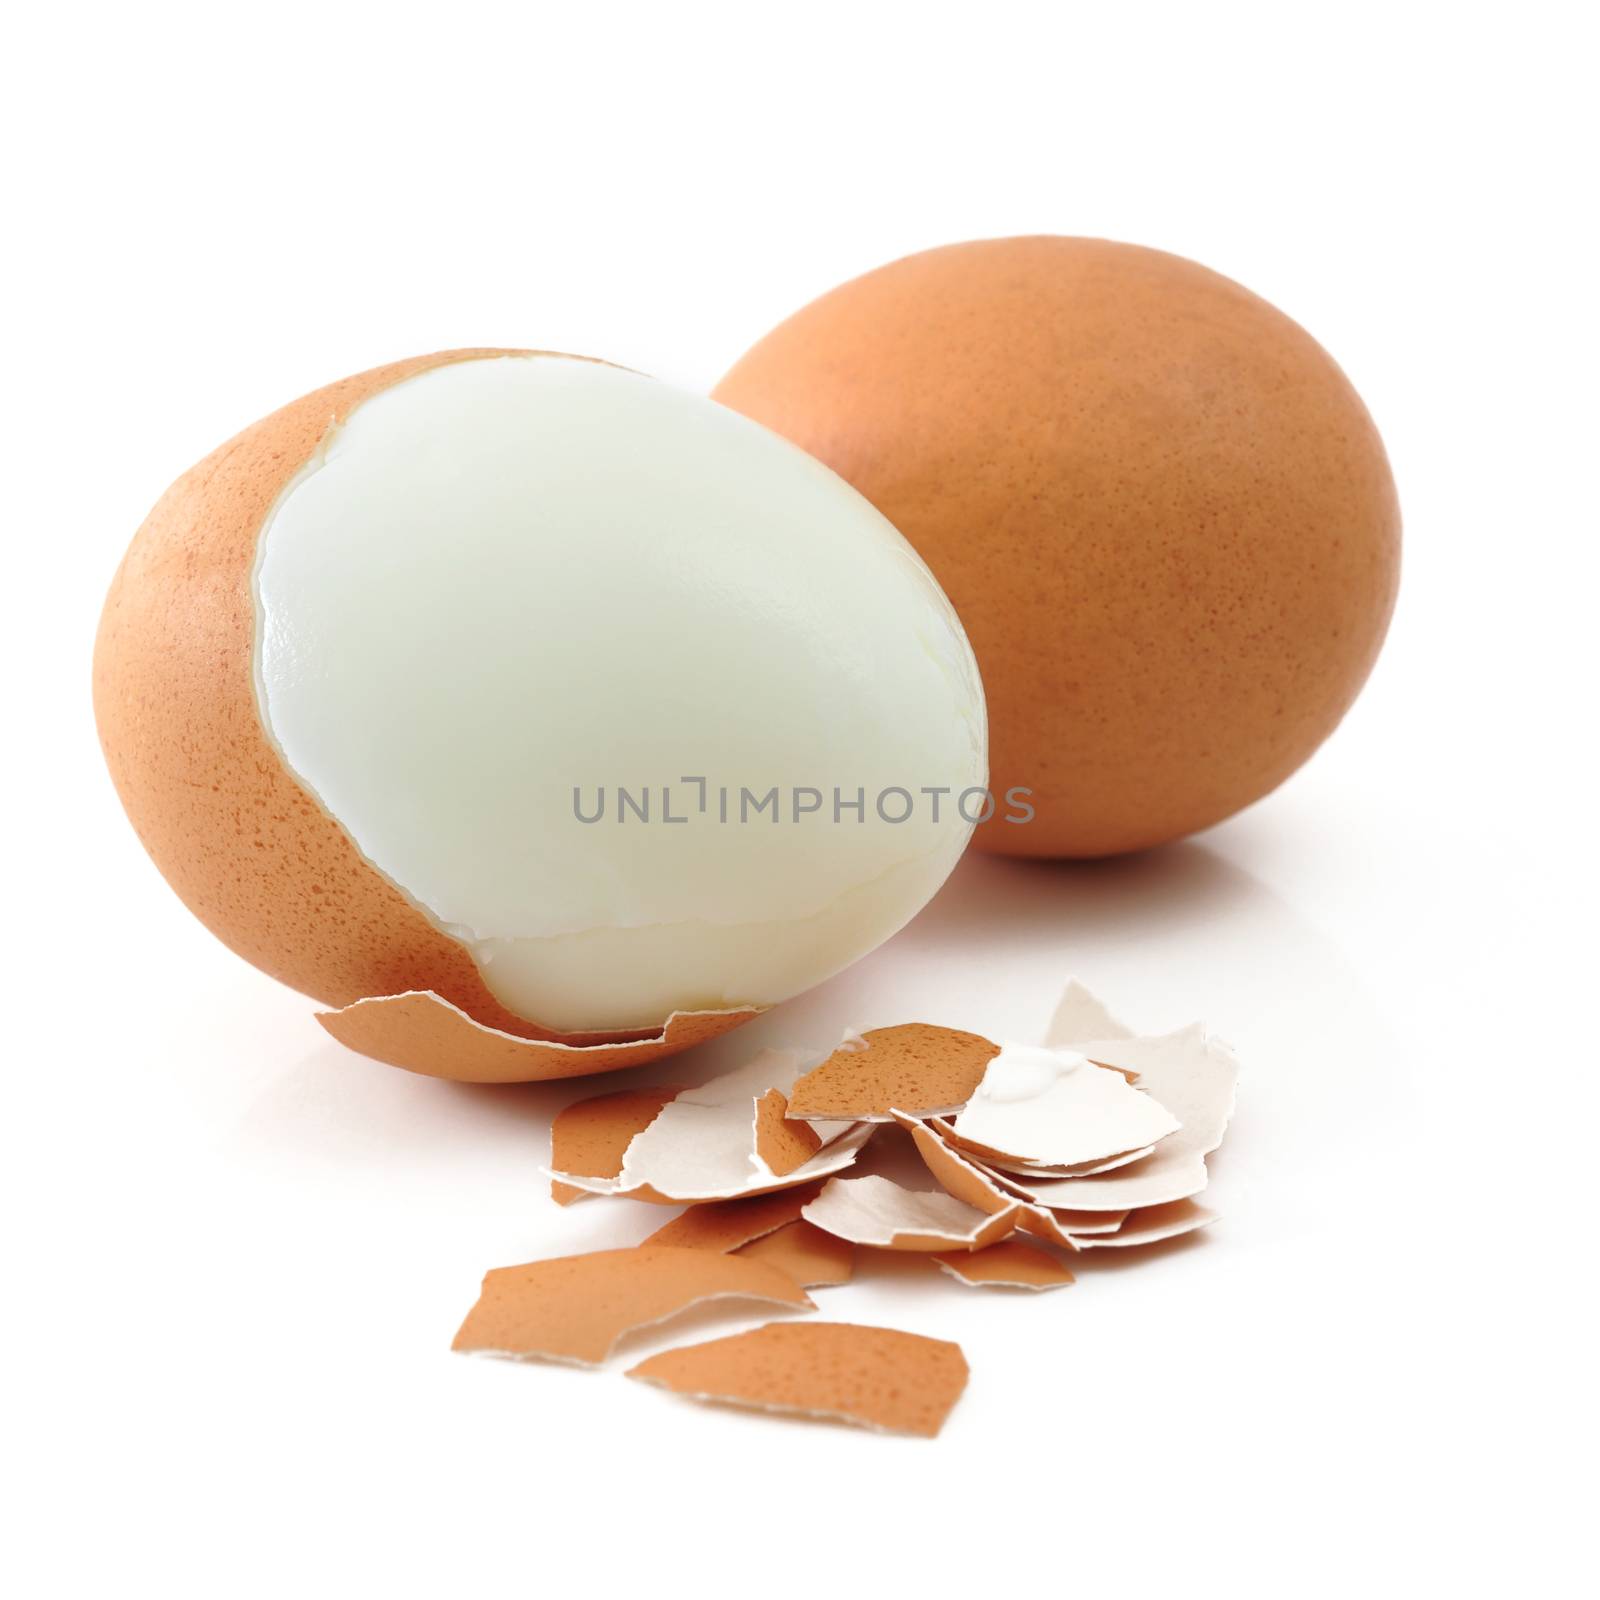 boiled egg isolated on white background